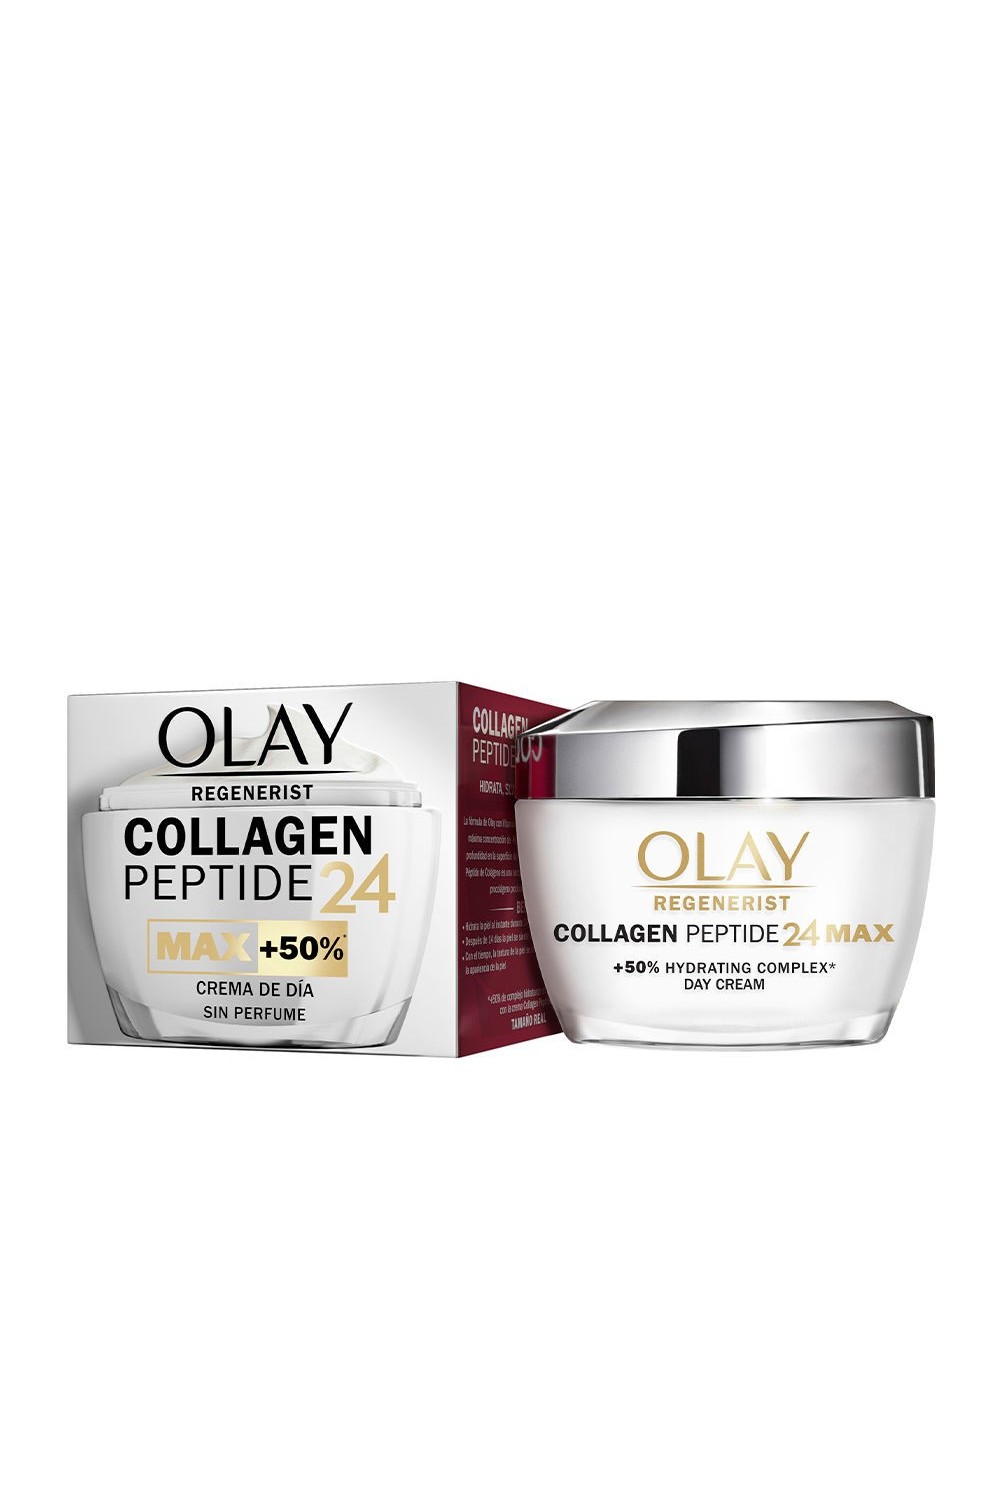 Olay Regenerist Collagen Peptide24 Max Day Cream 50ml